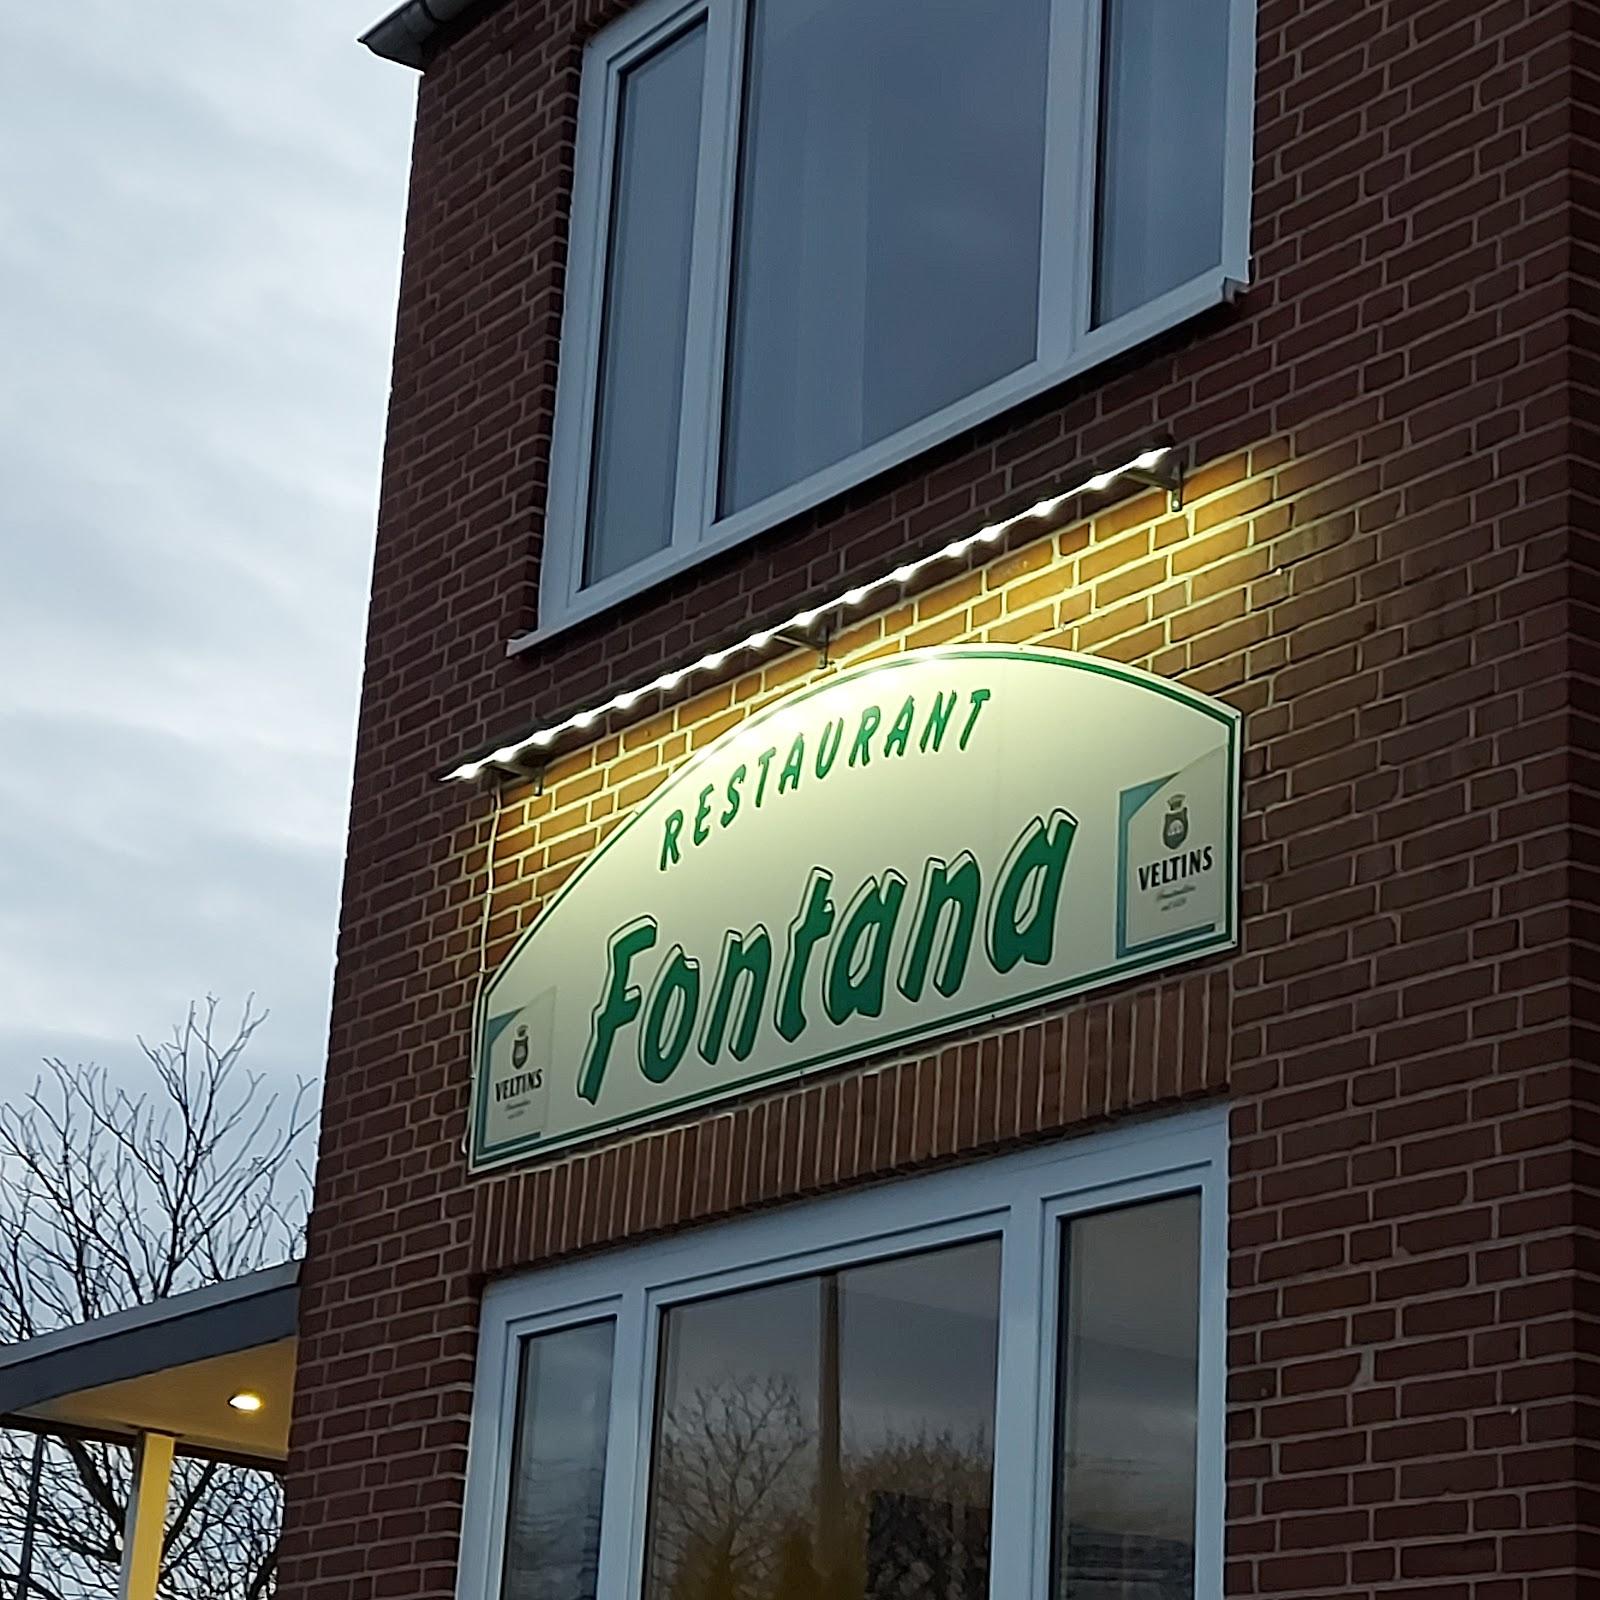 Restaurant "Fontana" in Giesen